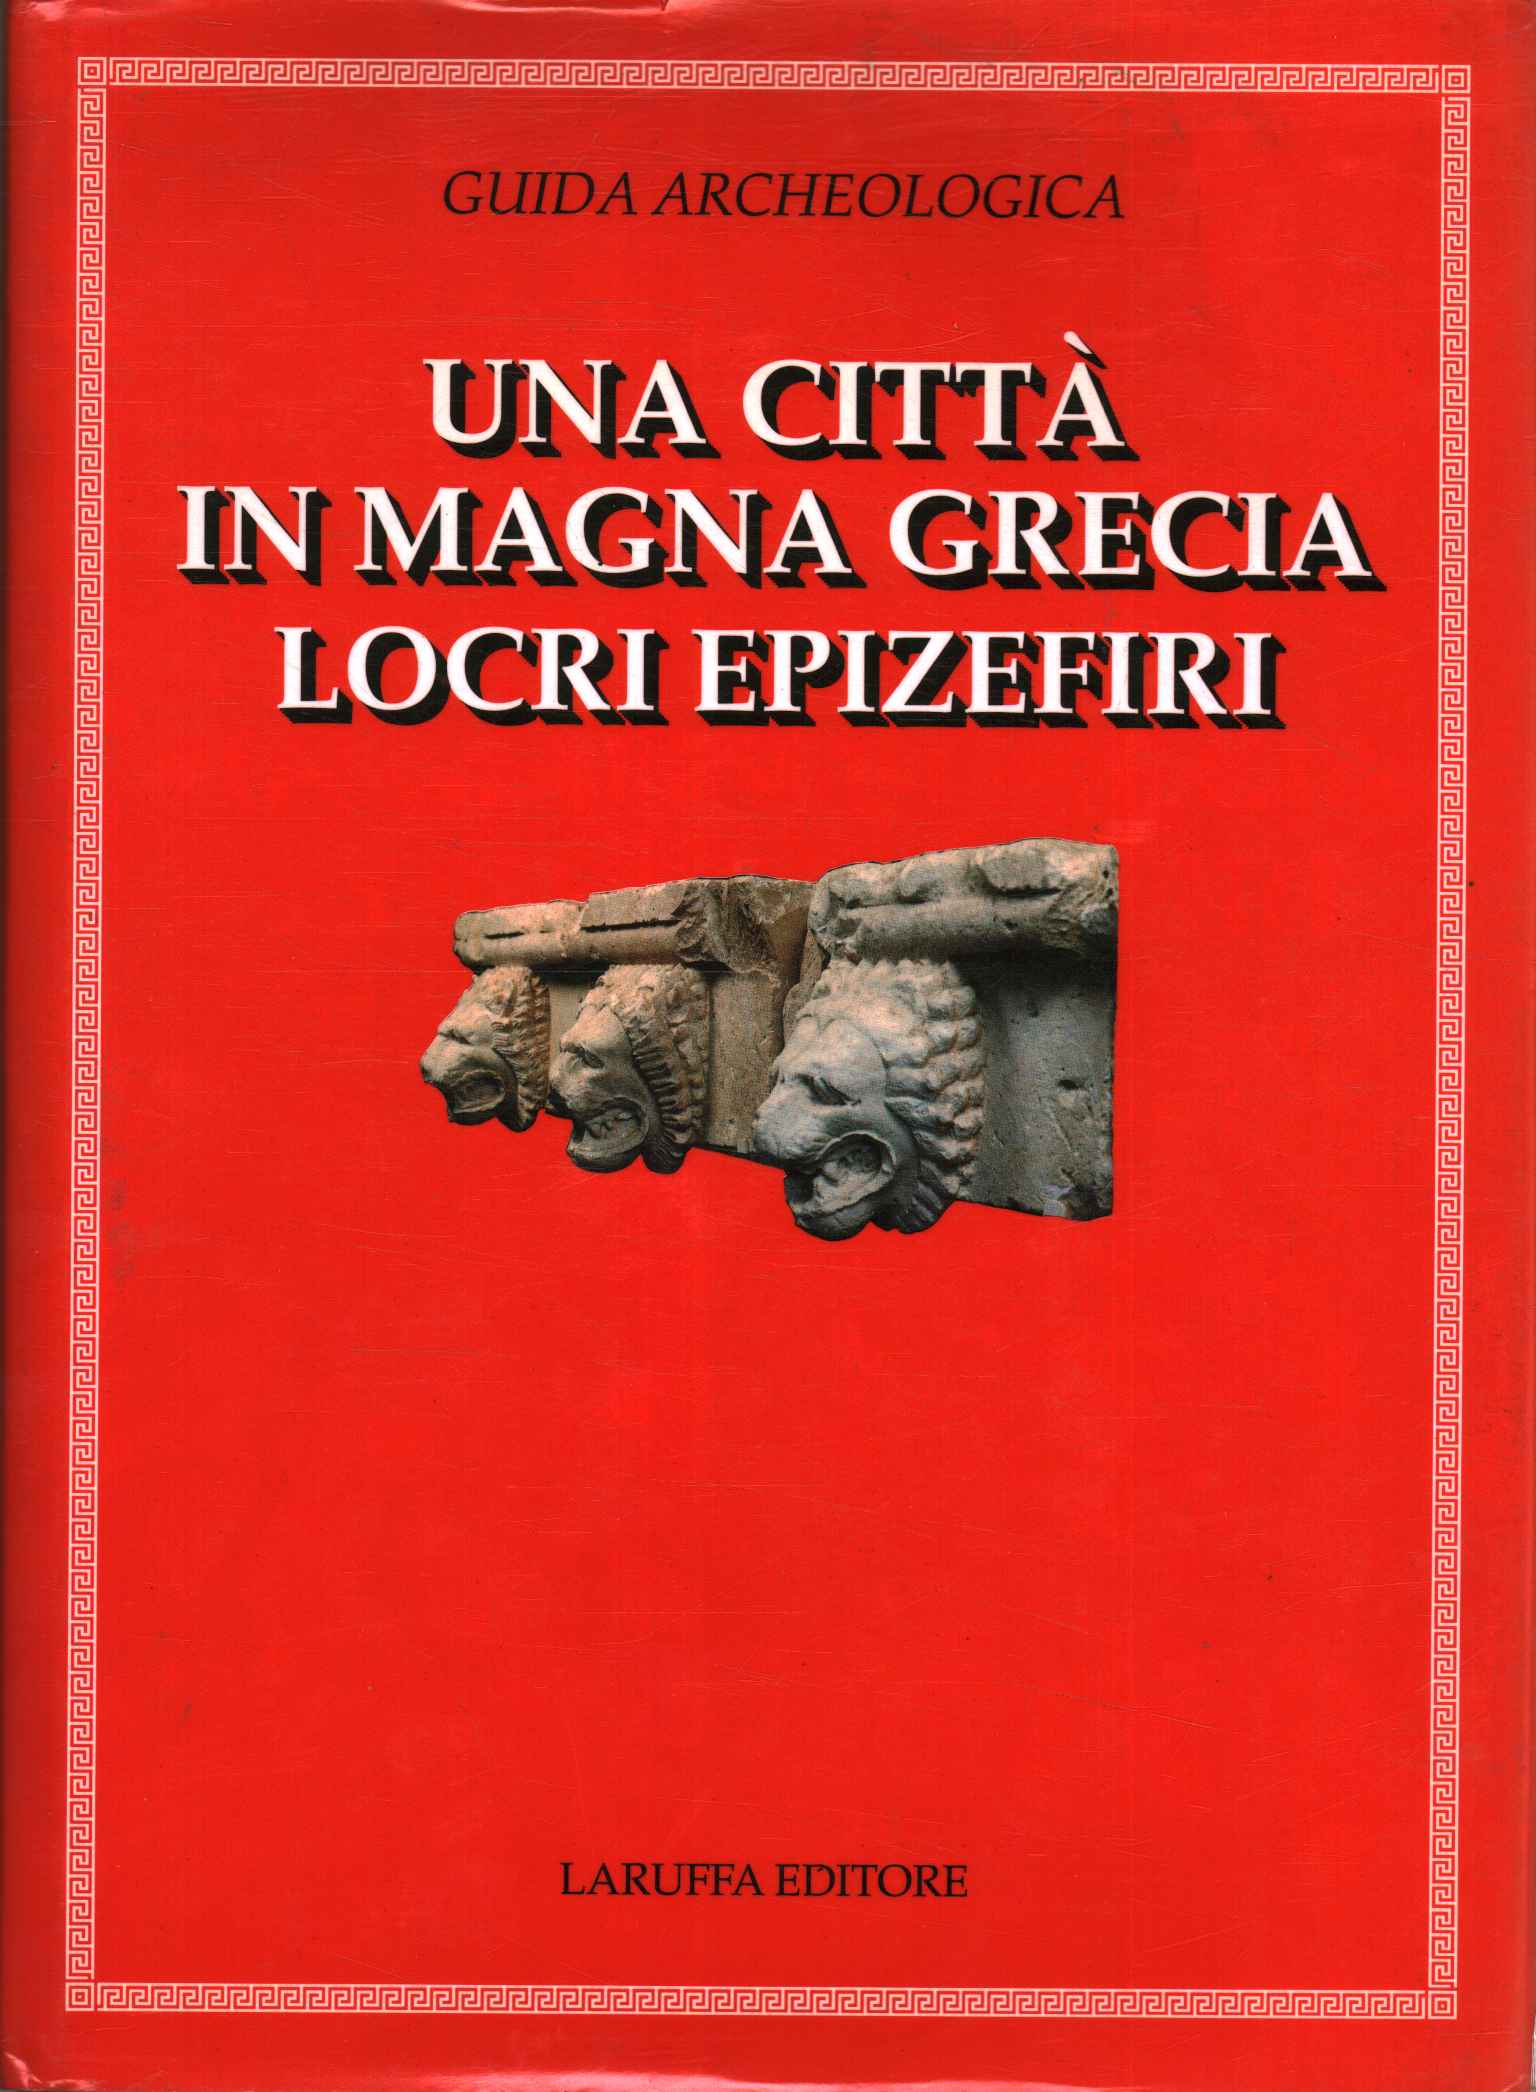 Una città in Magna Grecia Locri Epizefiri - AA.VV. (Laruffa Editore) [1990]